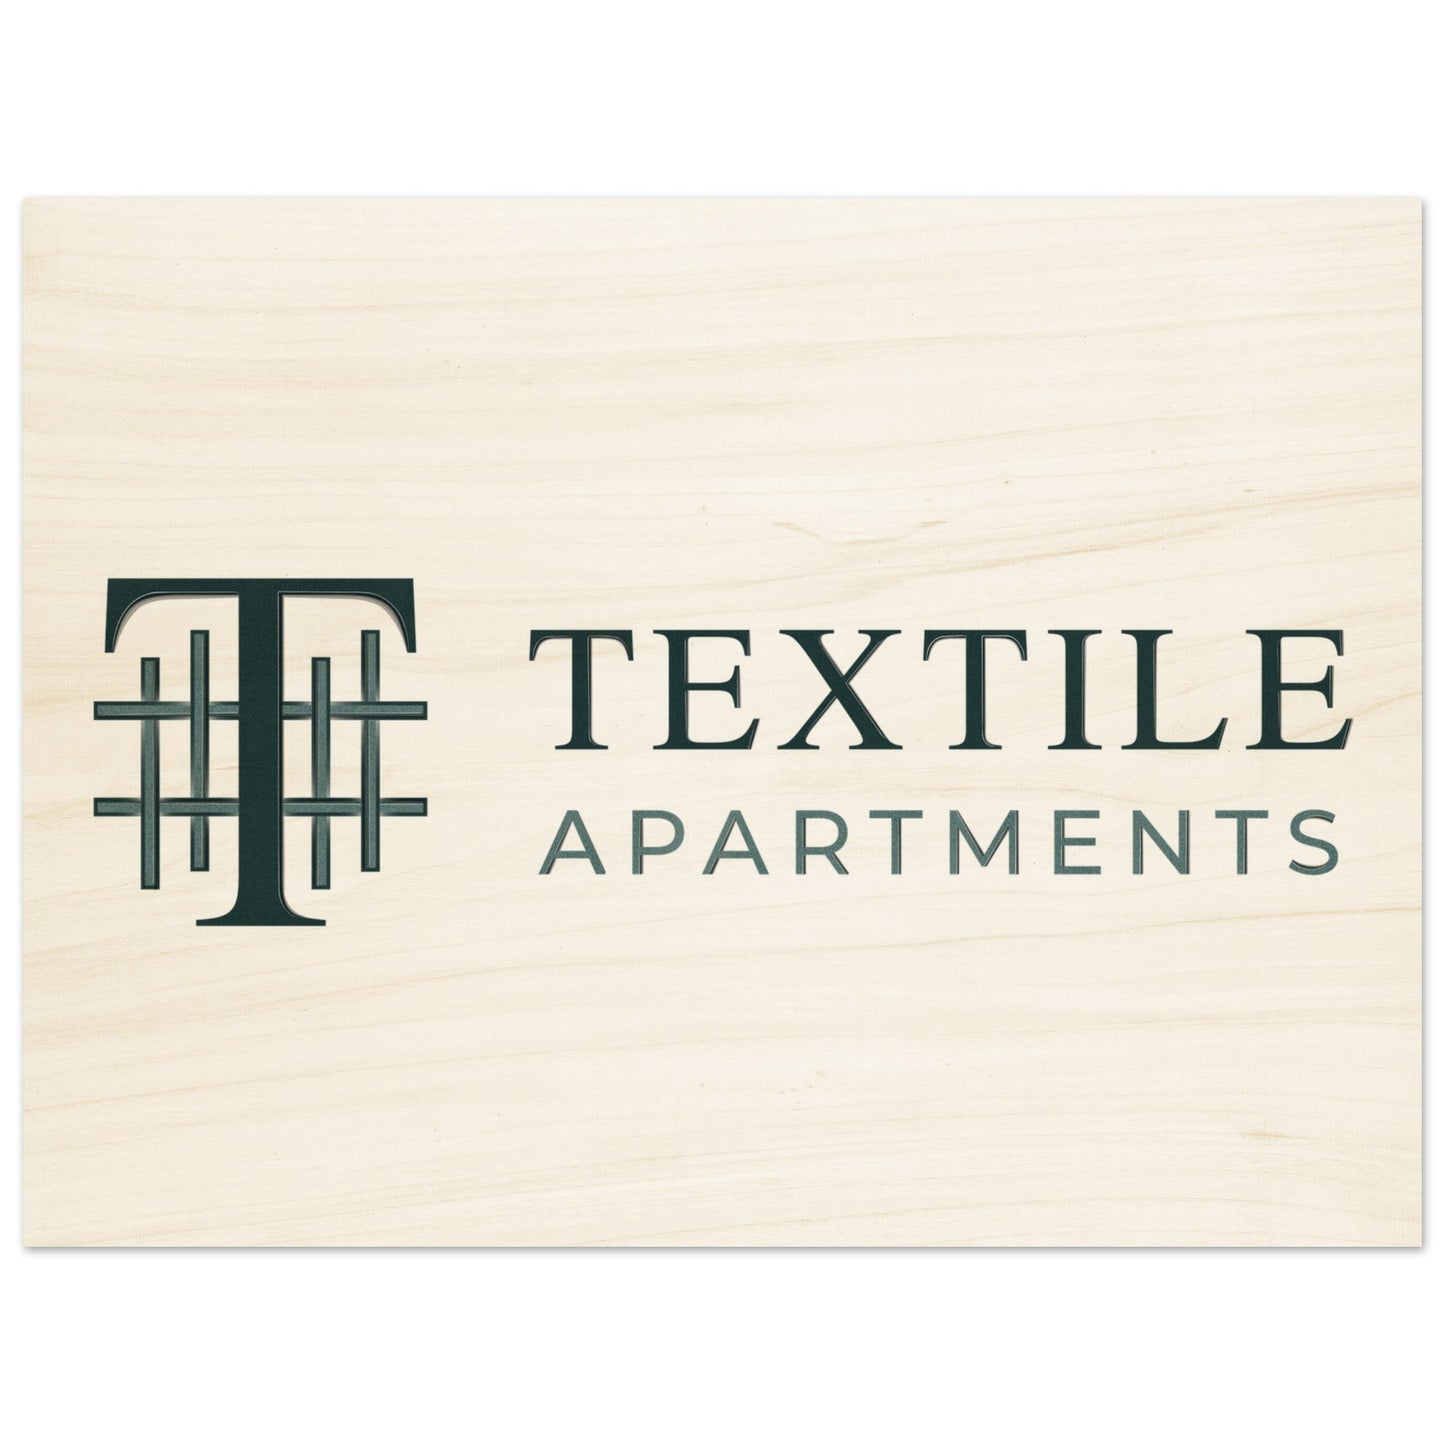 Textile Apartments - Wood Prints